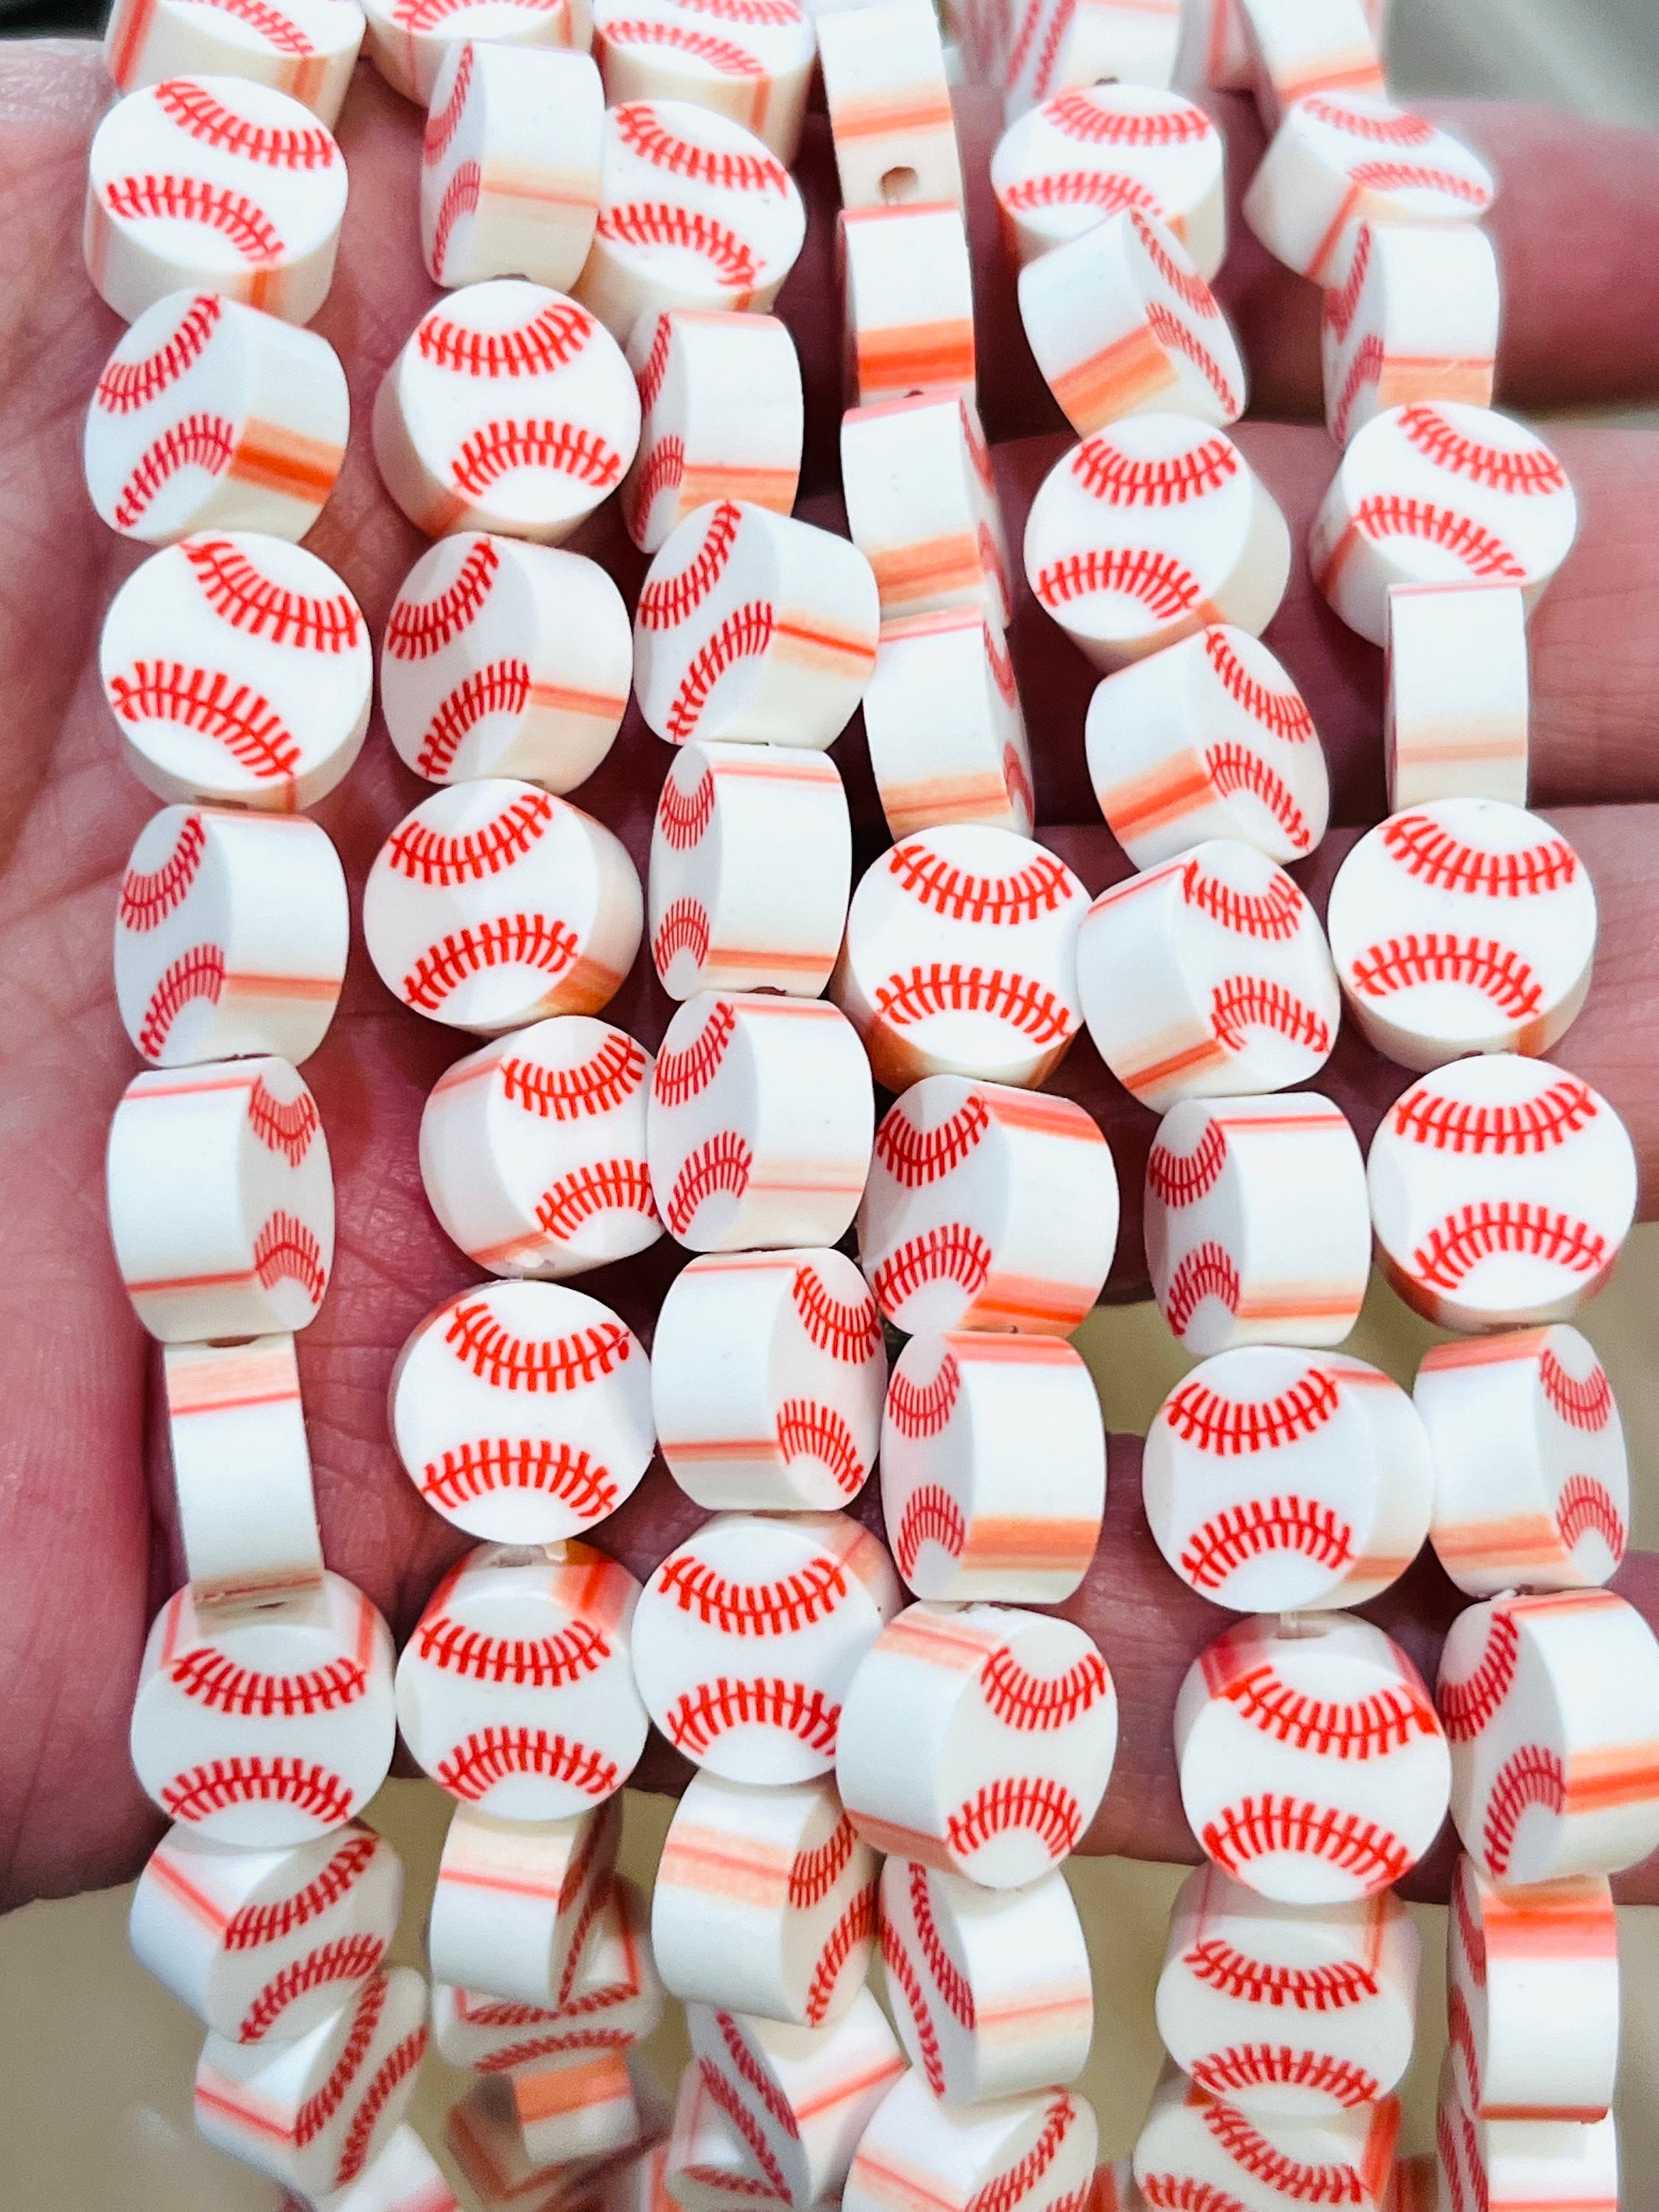 300 Pcs Sports Beads Sports Polymer Clay Beads Baseball Football Basketball